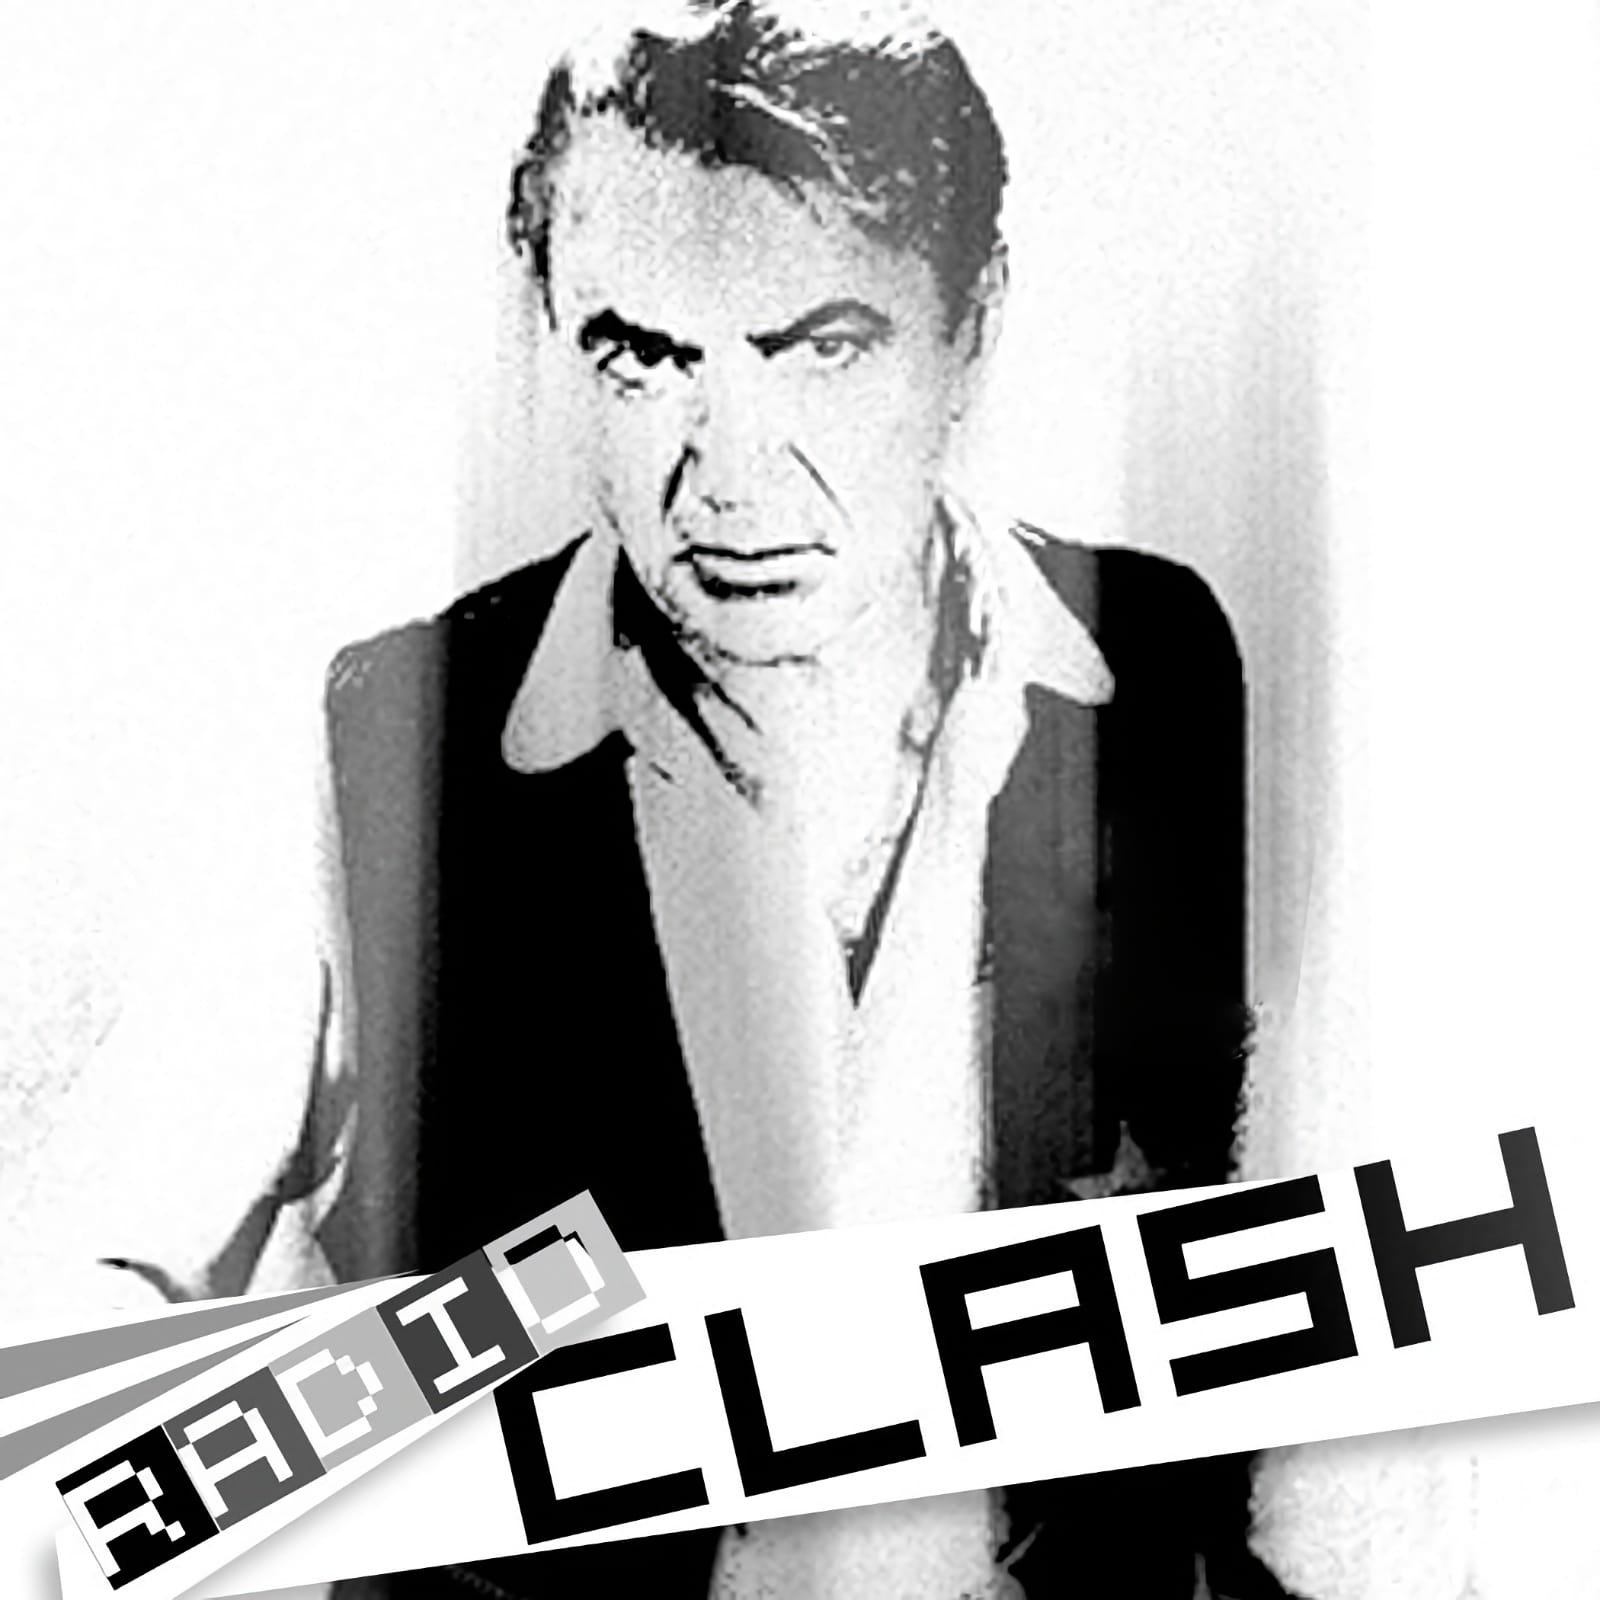 Radio Clash featured over at Podfinder